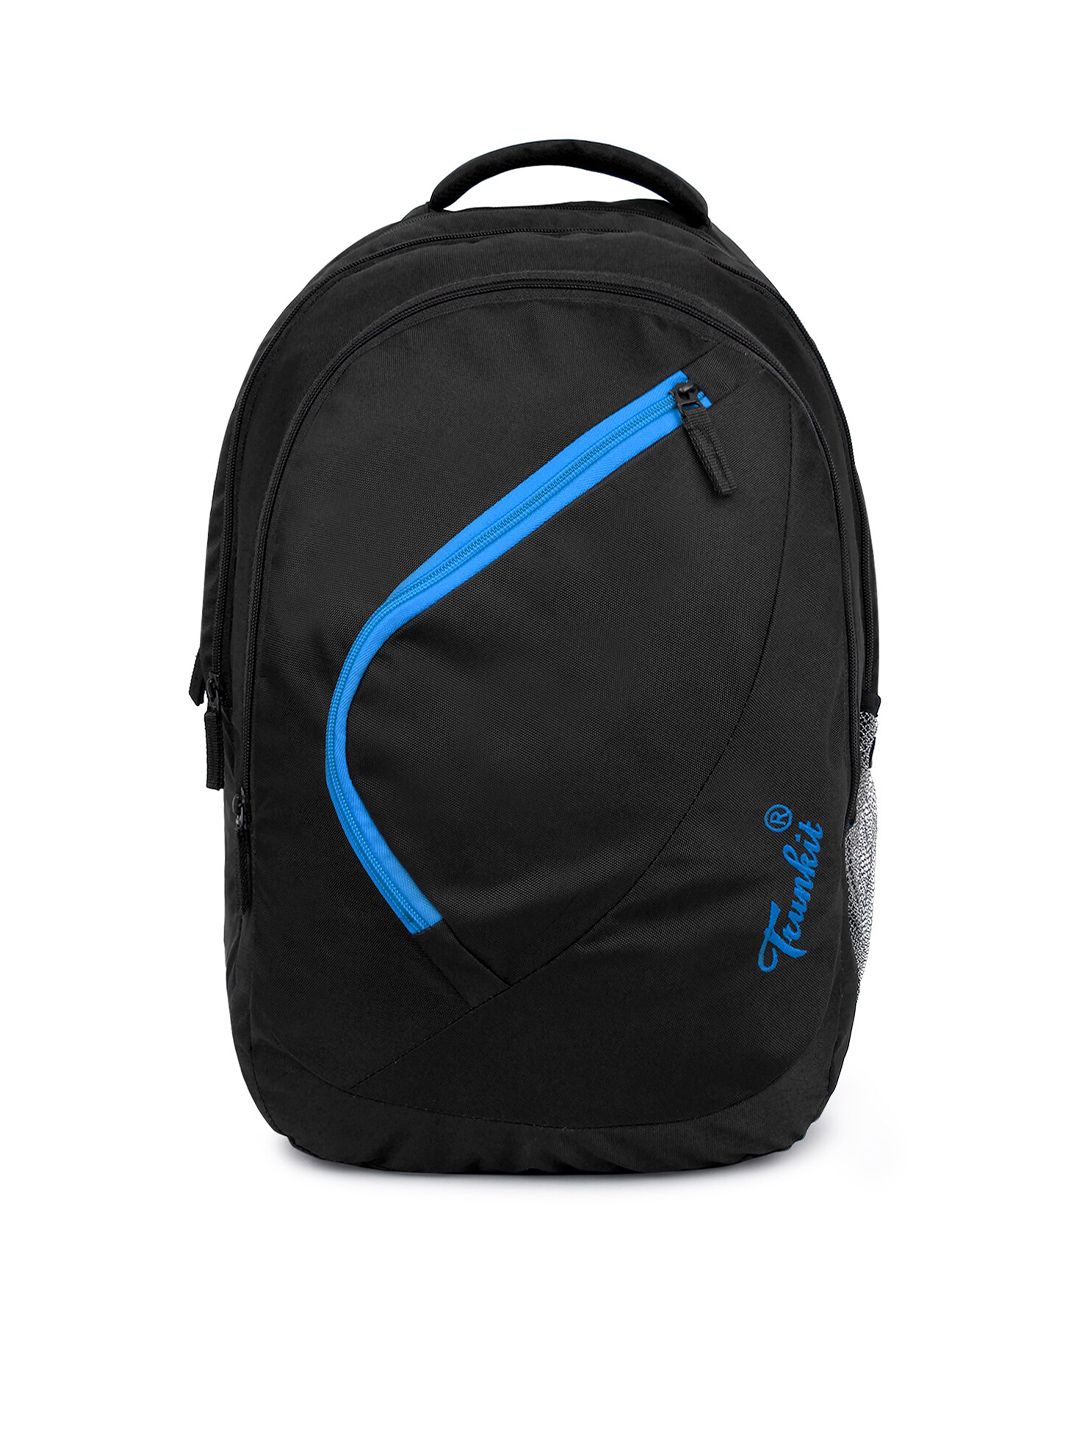 TRUNKIT Unisex Black & Blue Laptop Backpack Price in India